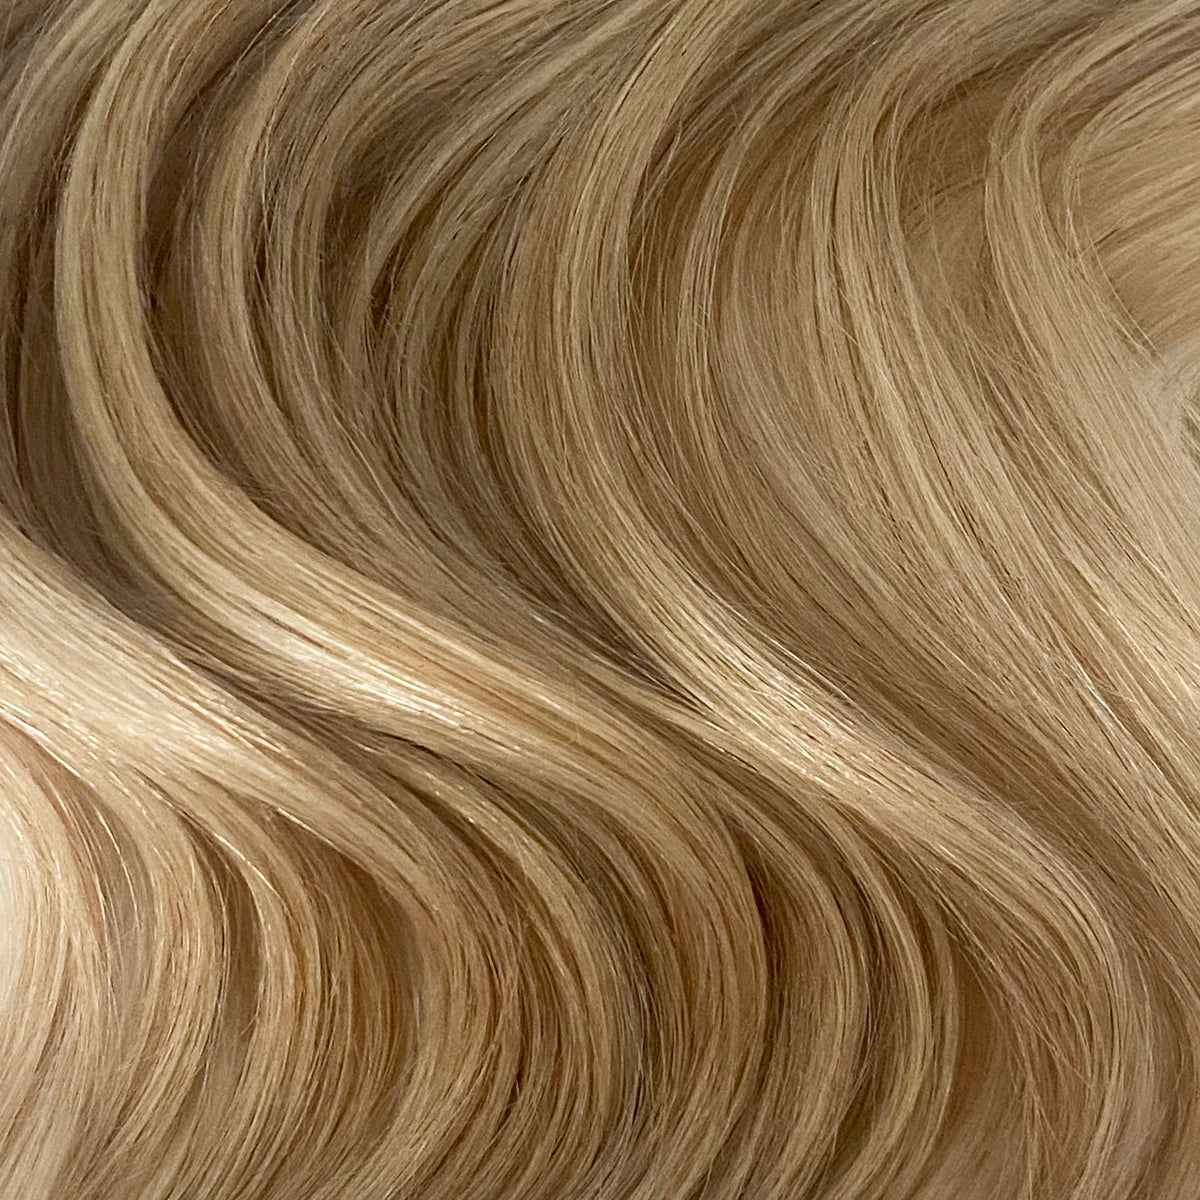 Flat Weft Hair Extensions - #24 Medium Sandy Blonde 22"